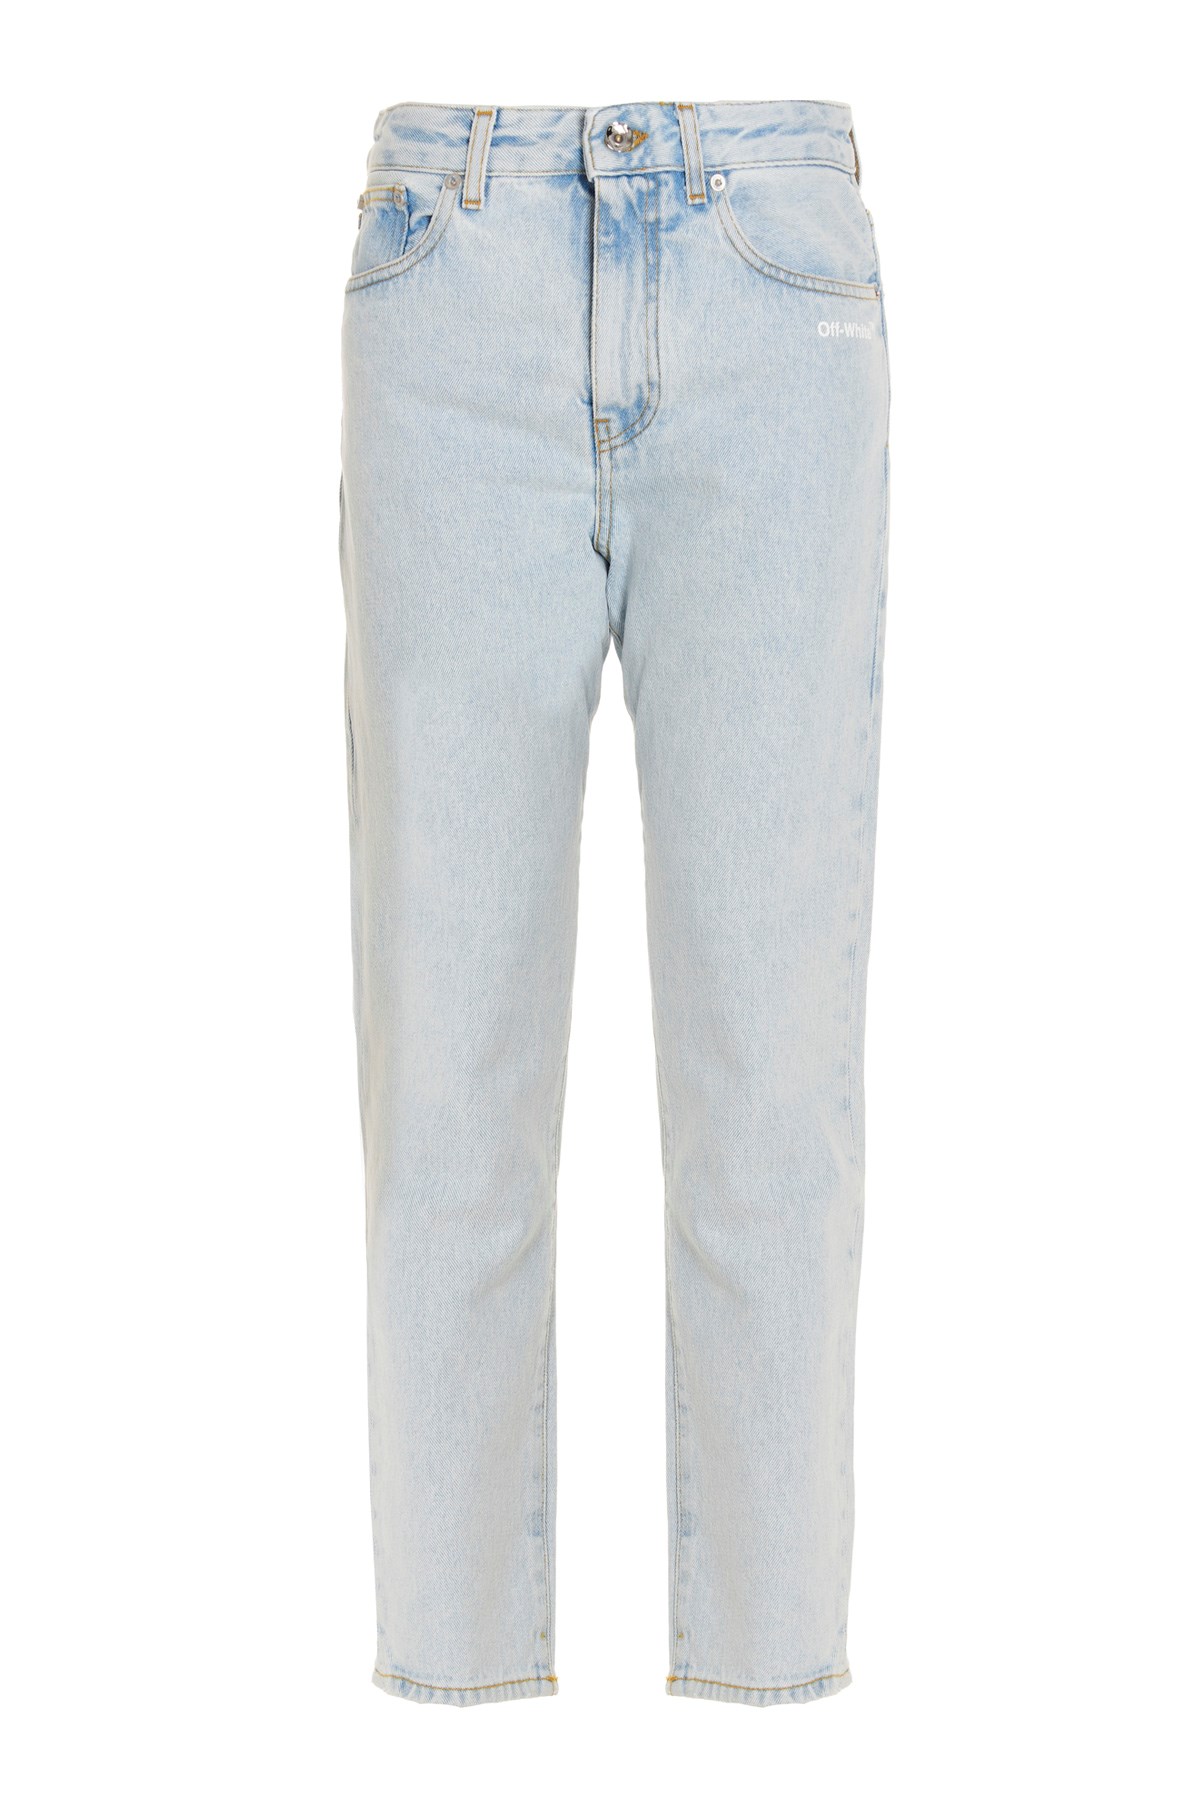 OFF-WHITE 'Diag' Jeans